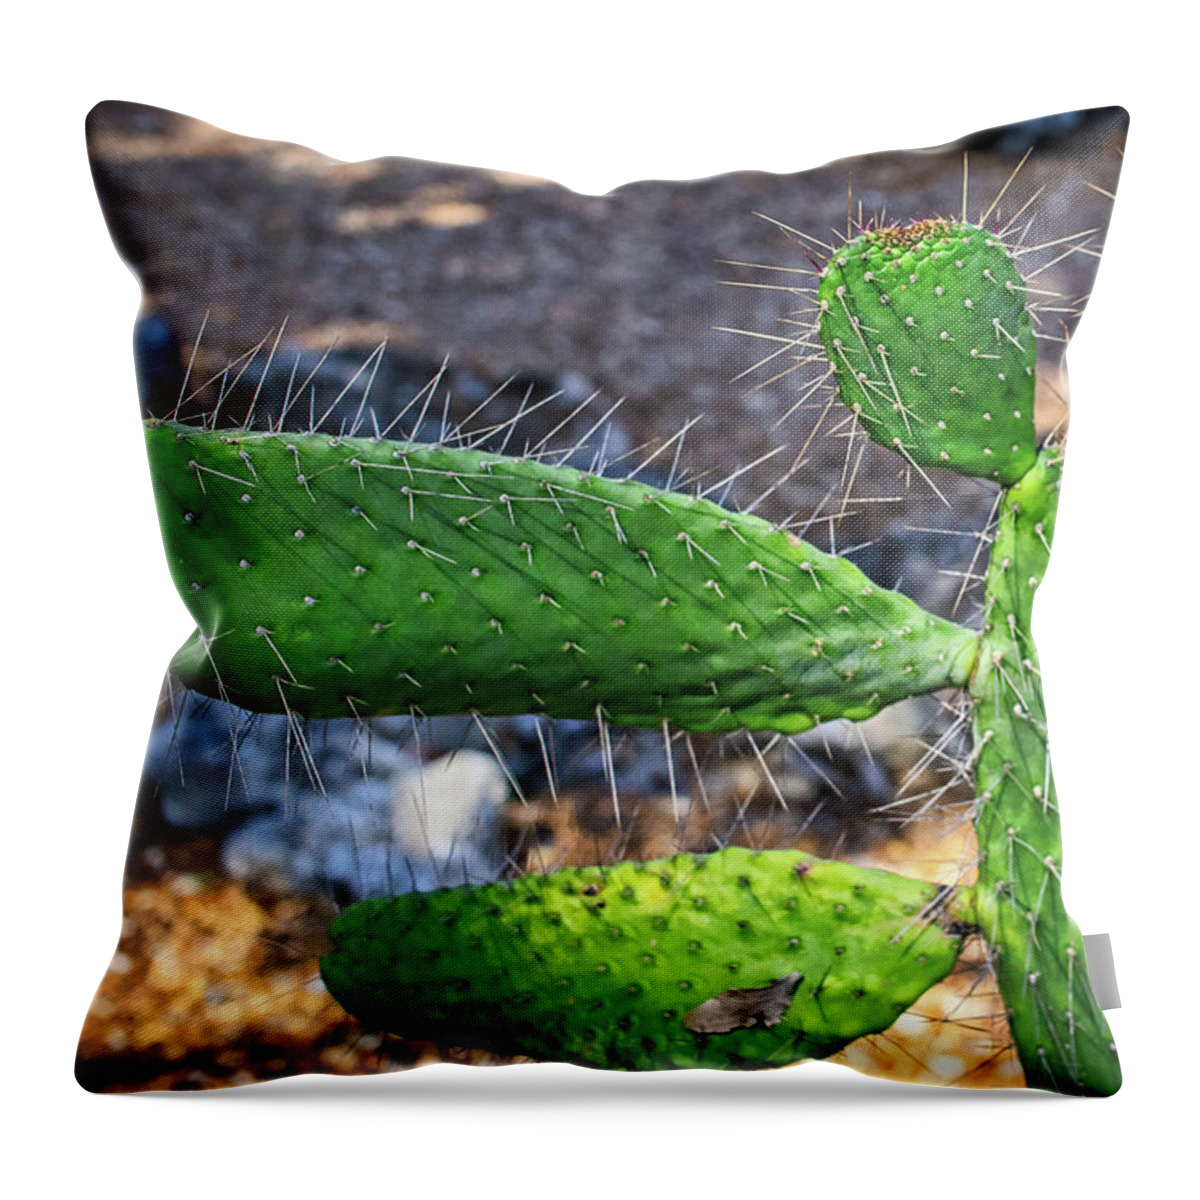 Cactus Throw Pillow featuring the photograph Cactus Beauty by Richard Goldman